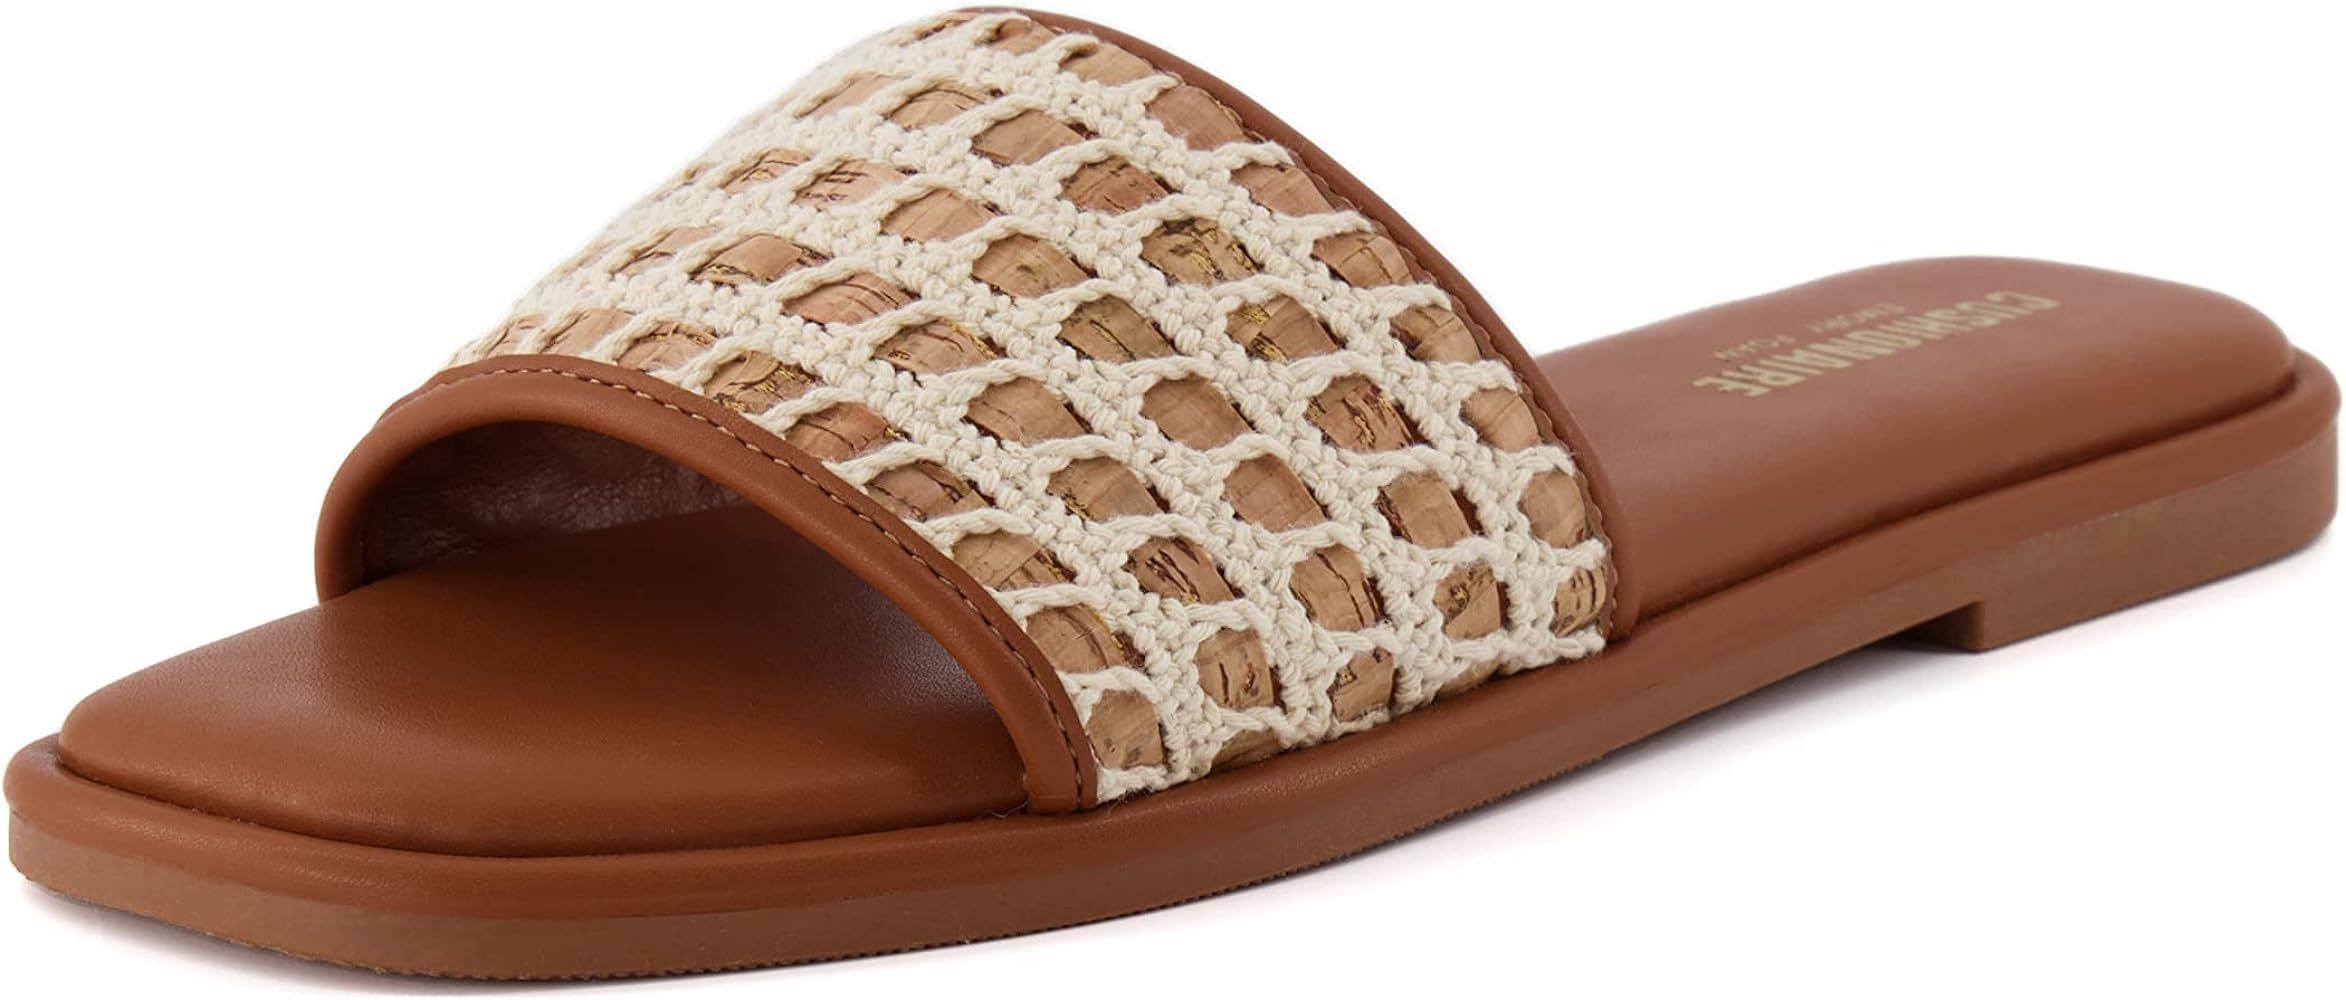 CUSHIONAIRE Women's Taffy crochet cork slide sandal +Memory Foam, Wide Widths Available | Amazon (US)